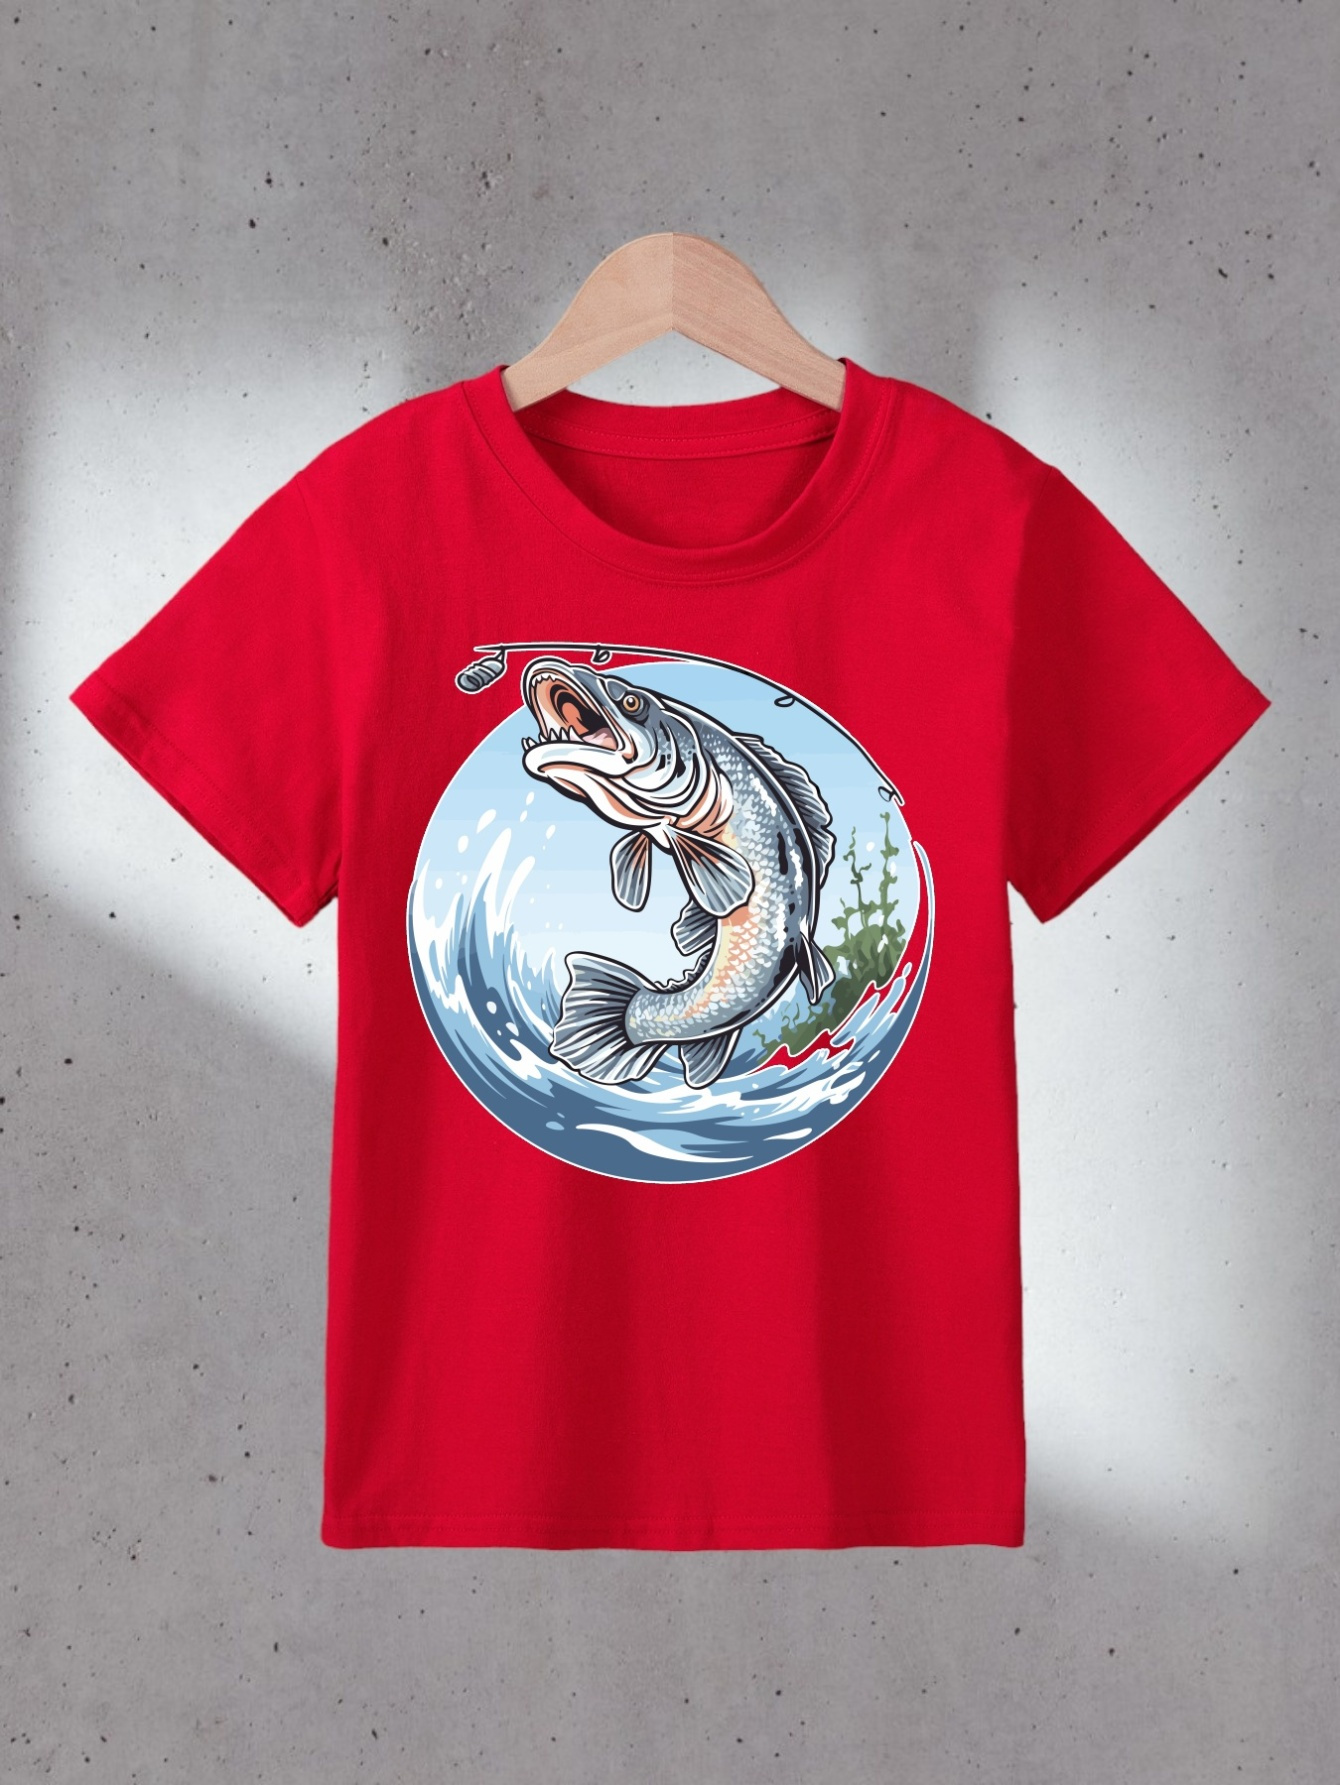 Fishing Shirts for Boys - Fishing Shirt - Kids Fishing Shirts - Fishing